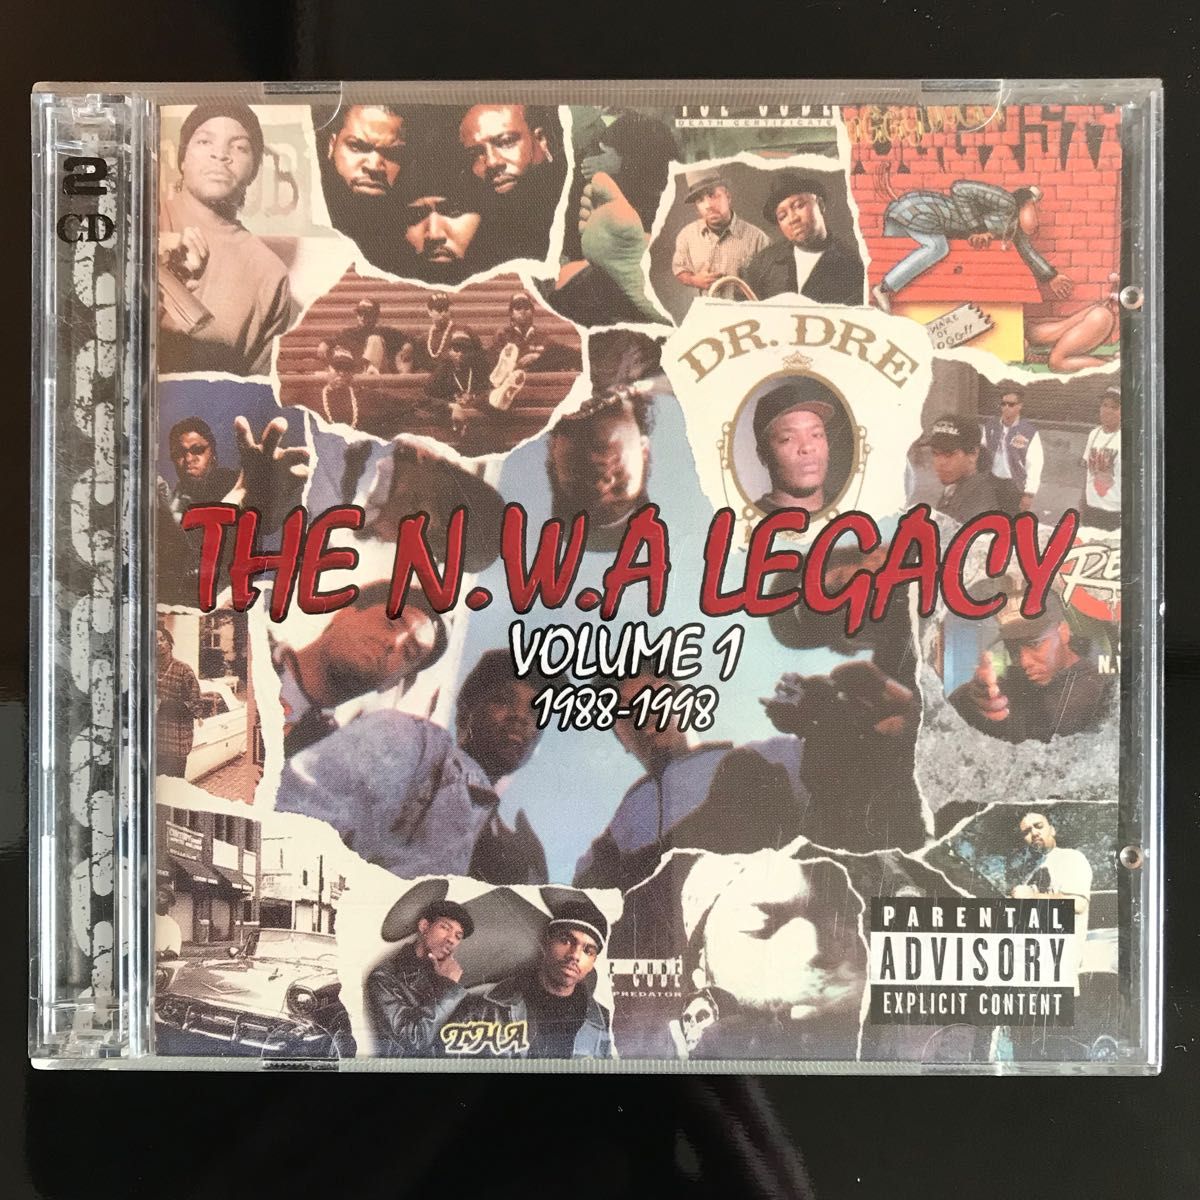 THE N.W.A. LEGACY VOLUME 1 1988-1998 US盤 CD2枚組 G-RAP WESTSIDE